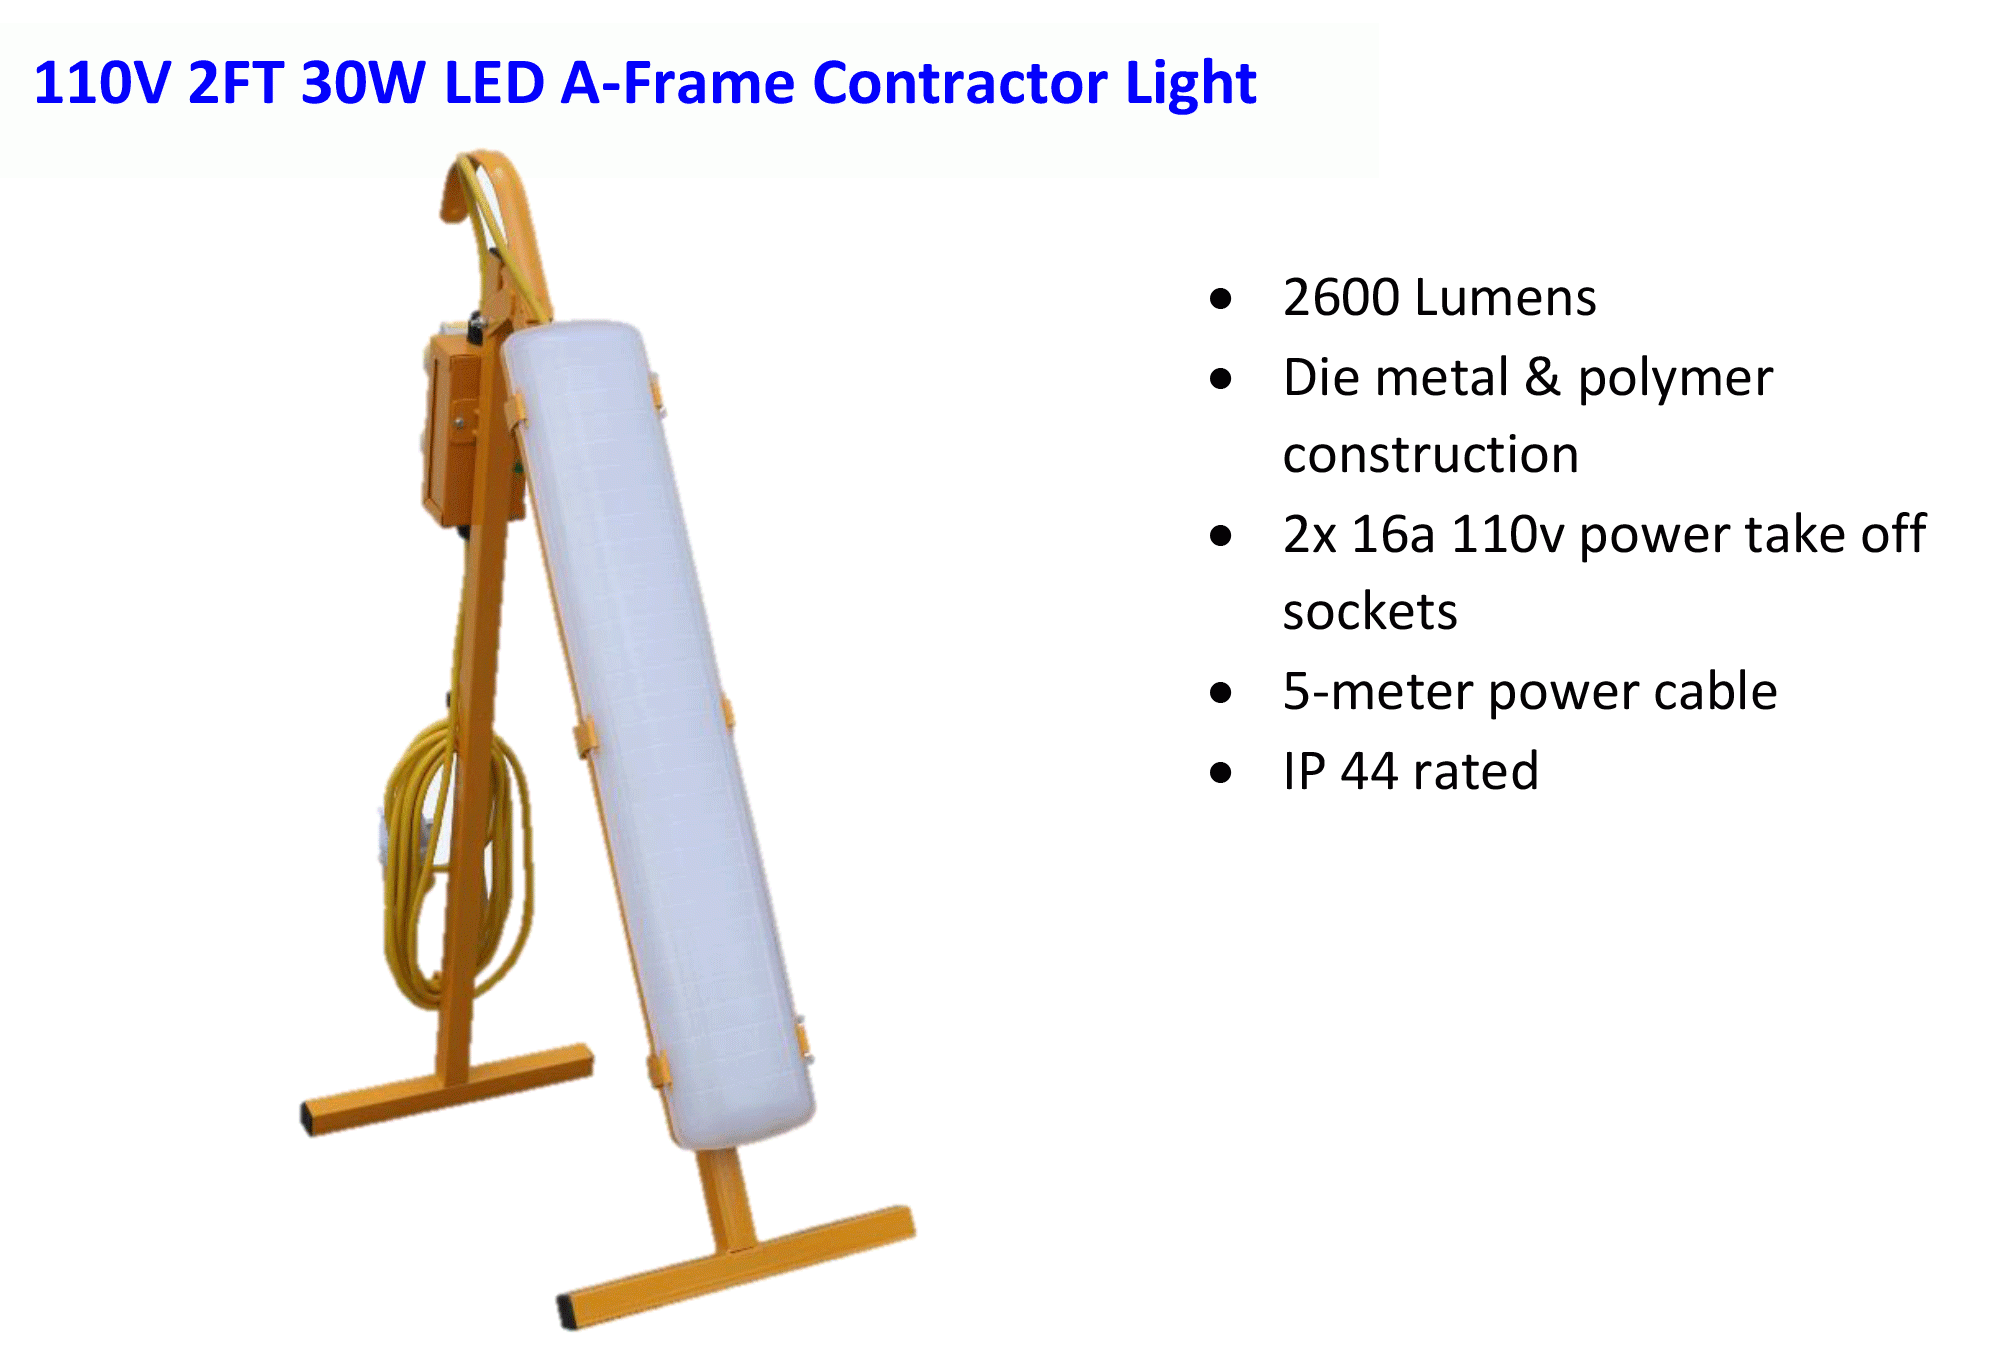 A-frame-Contractor-Light.gif#asset:9239